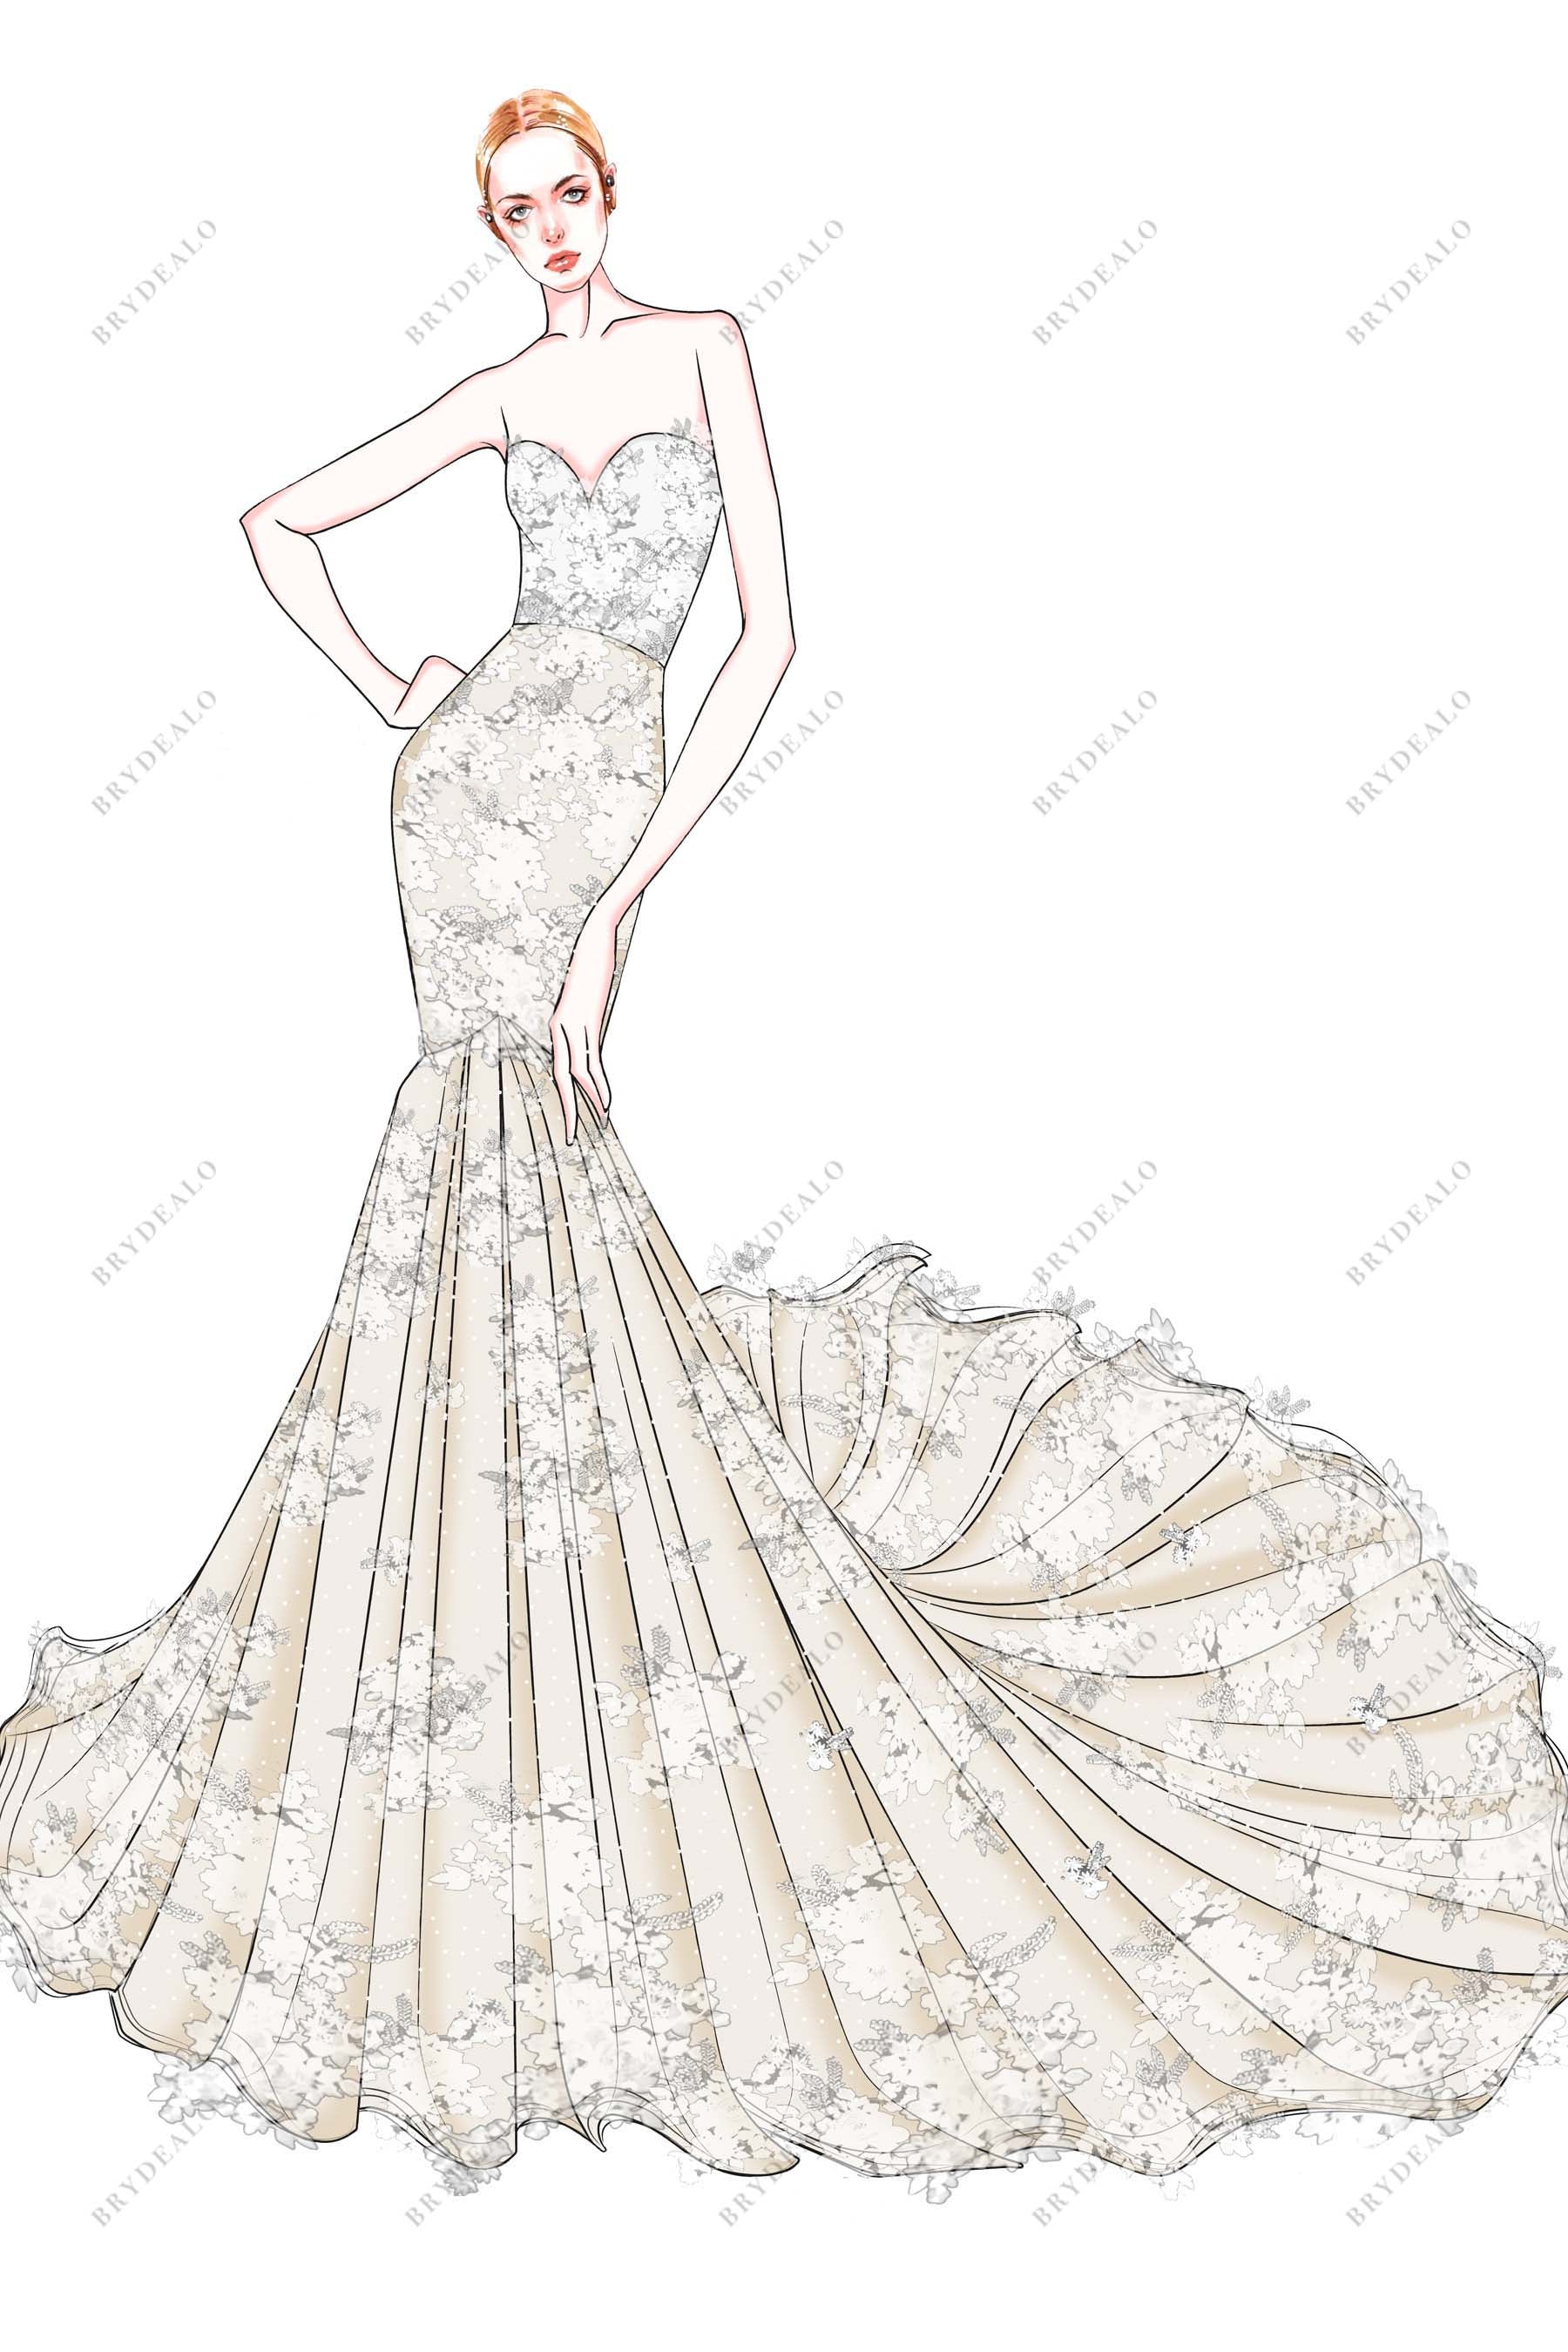 Strapless Ivory Lace Champagne Mermaid Designer Wedding Dress Sketch